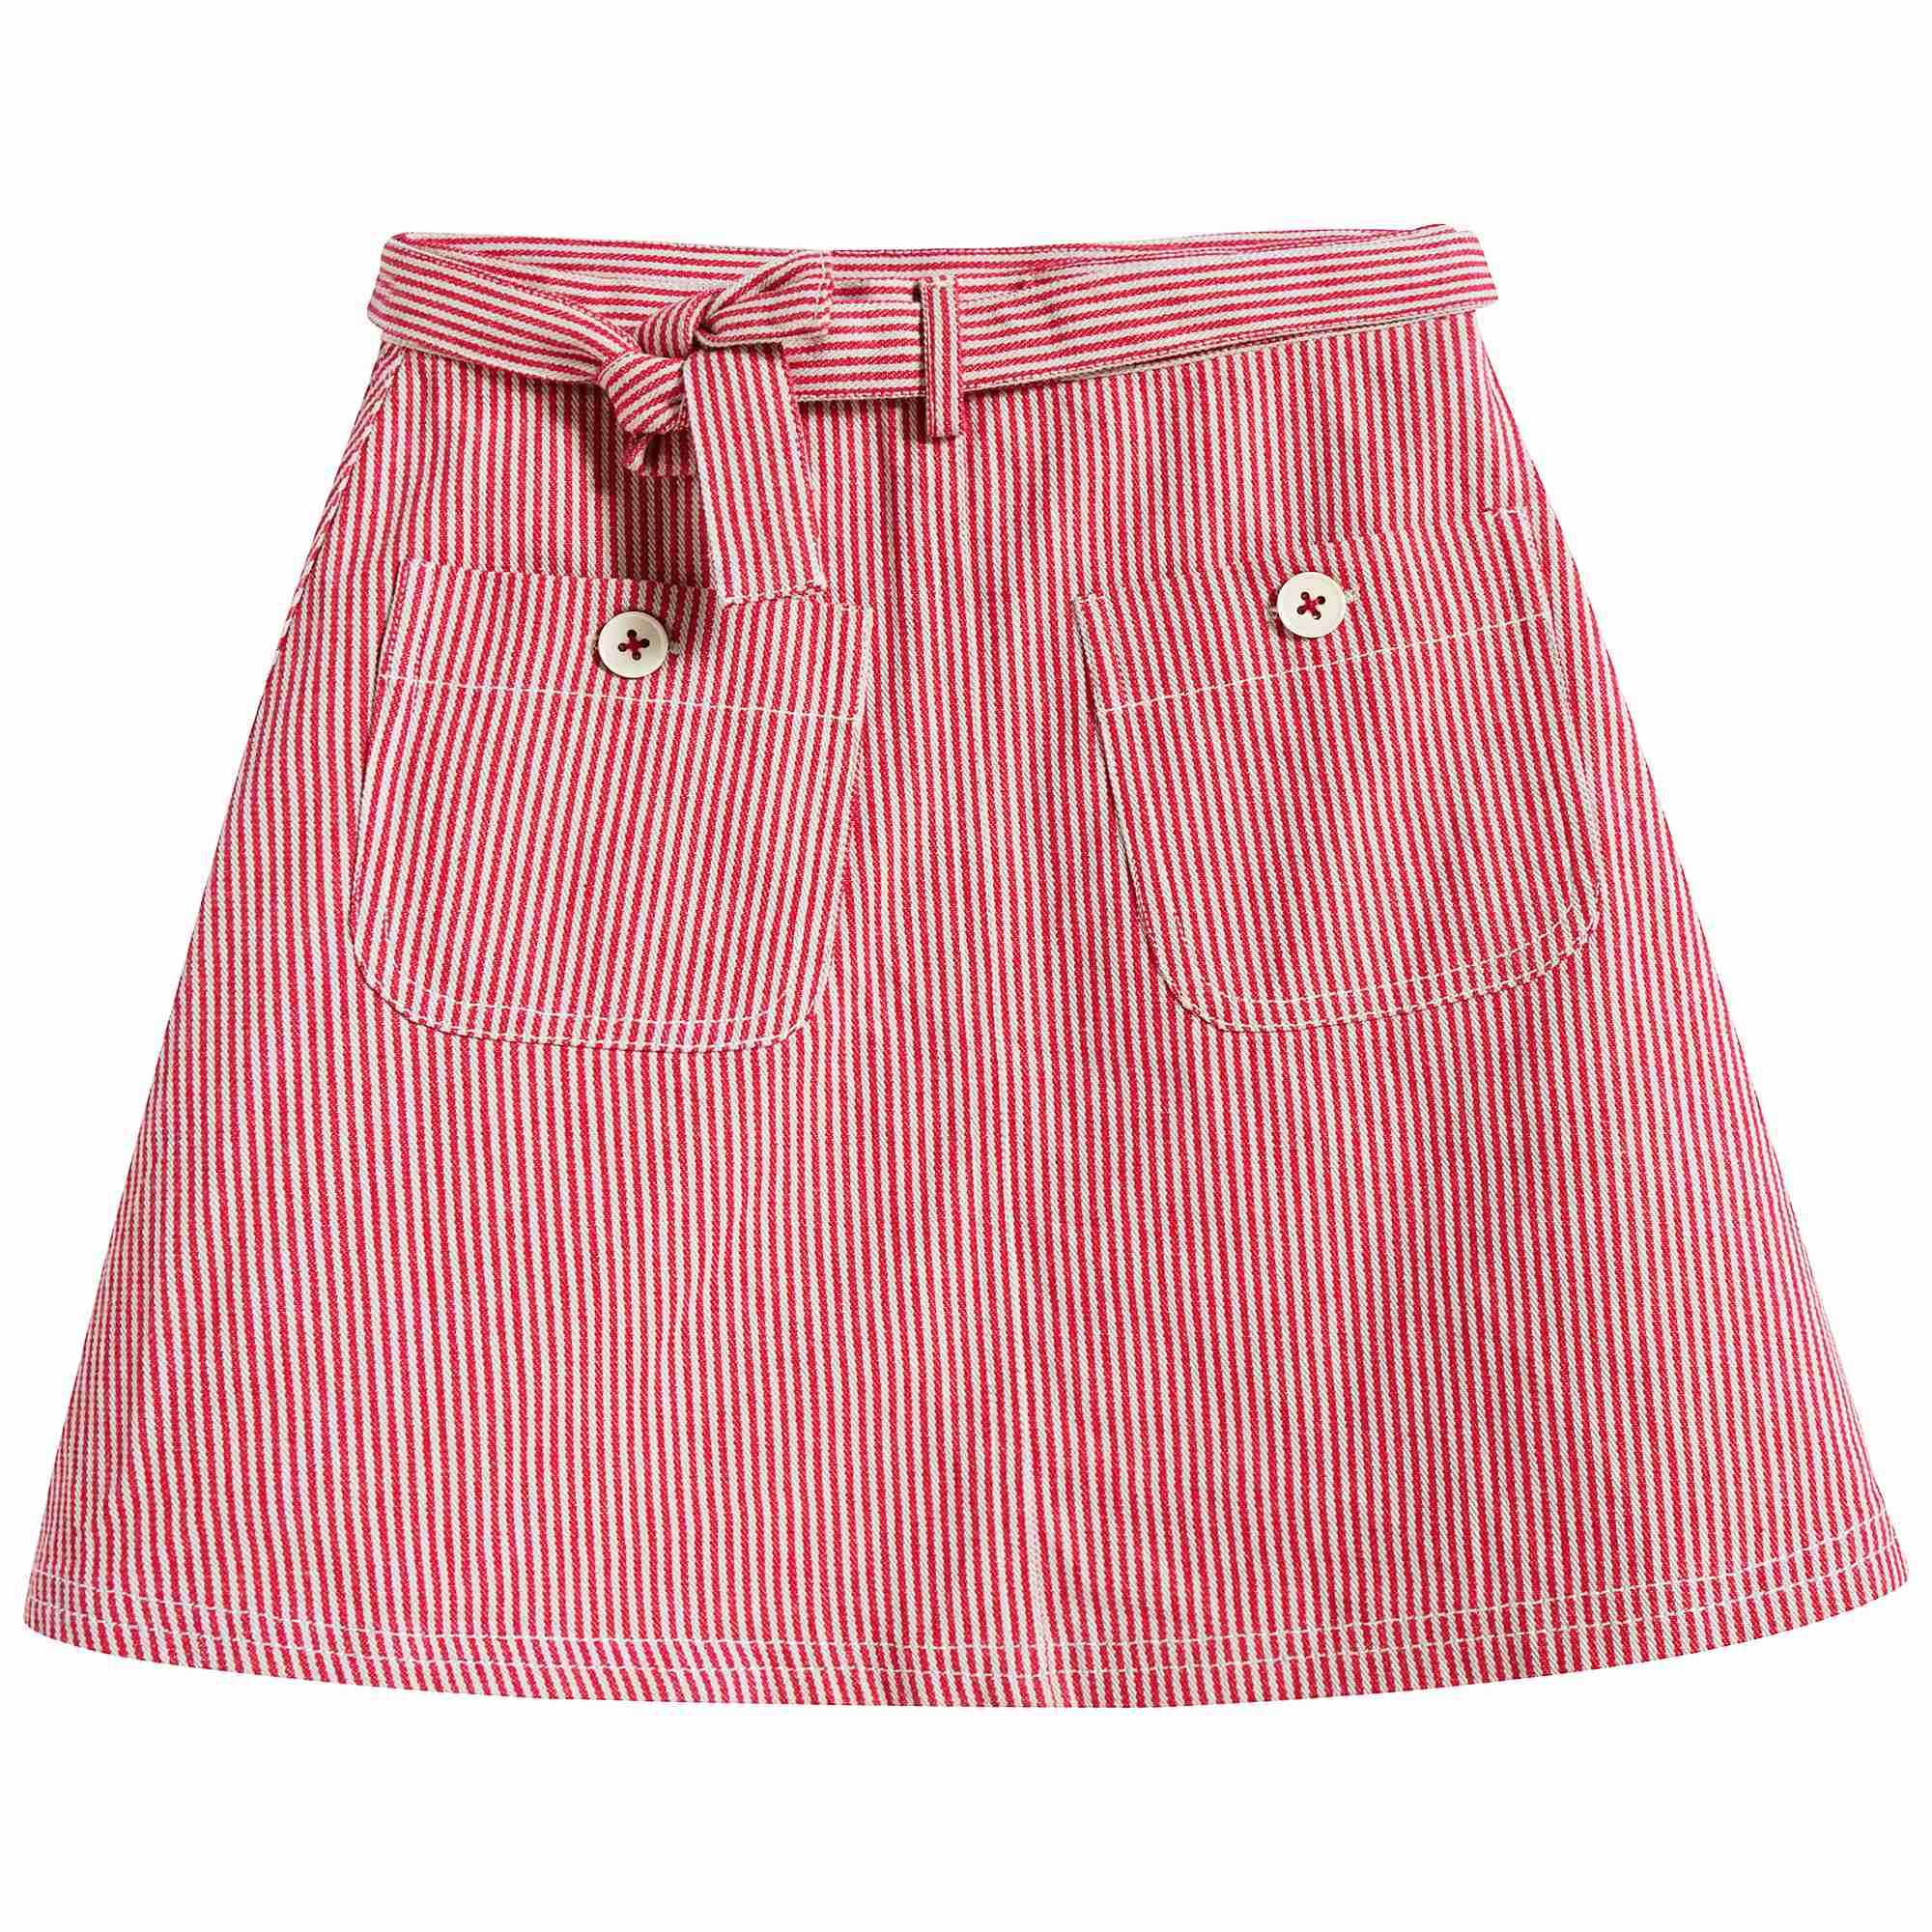 Girls Berry Striped Skirt